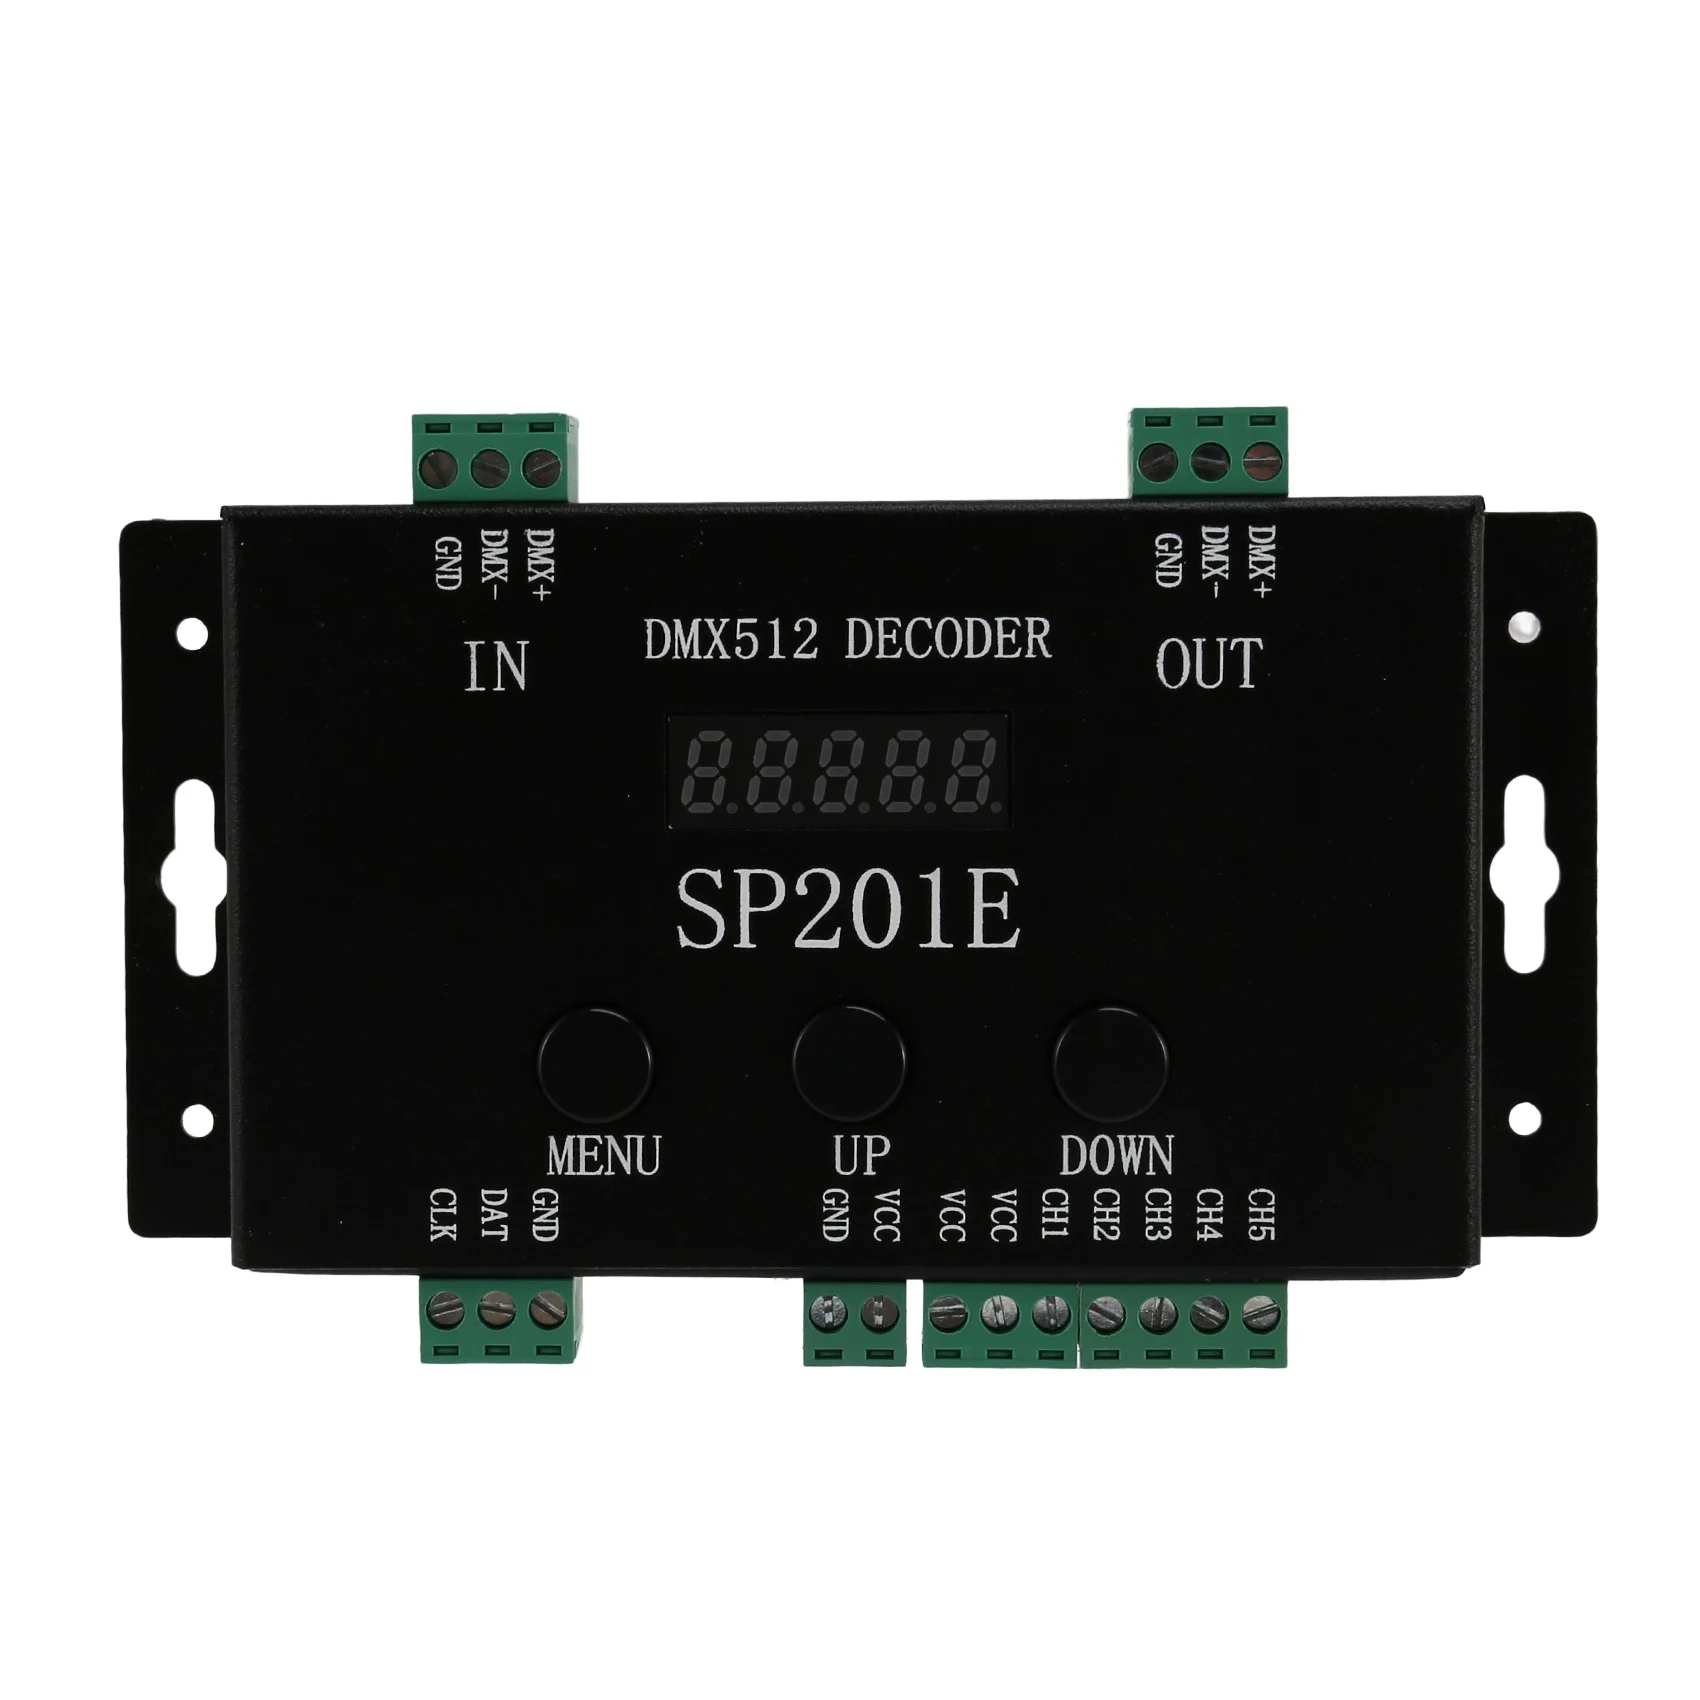 

SP201E DMX512 WS2812B WS2811 DMX to SPI Controller Decoder,Support Multiple ICs